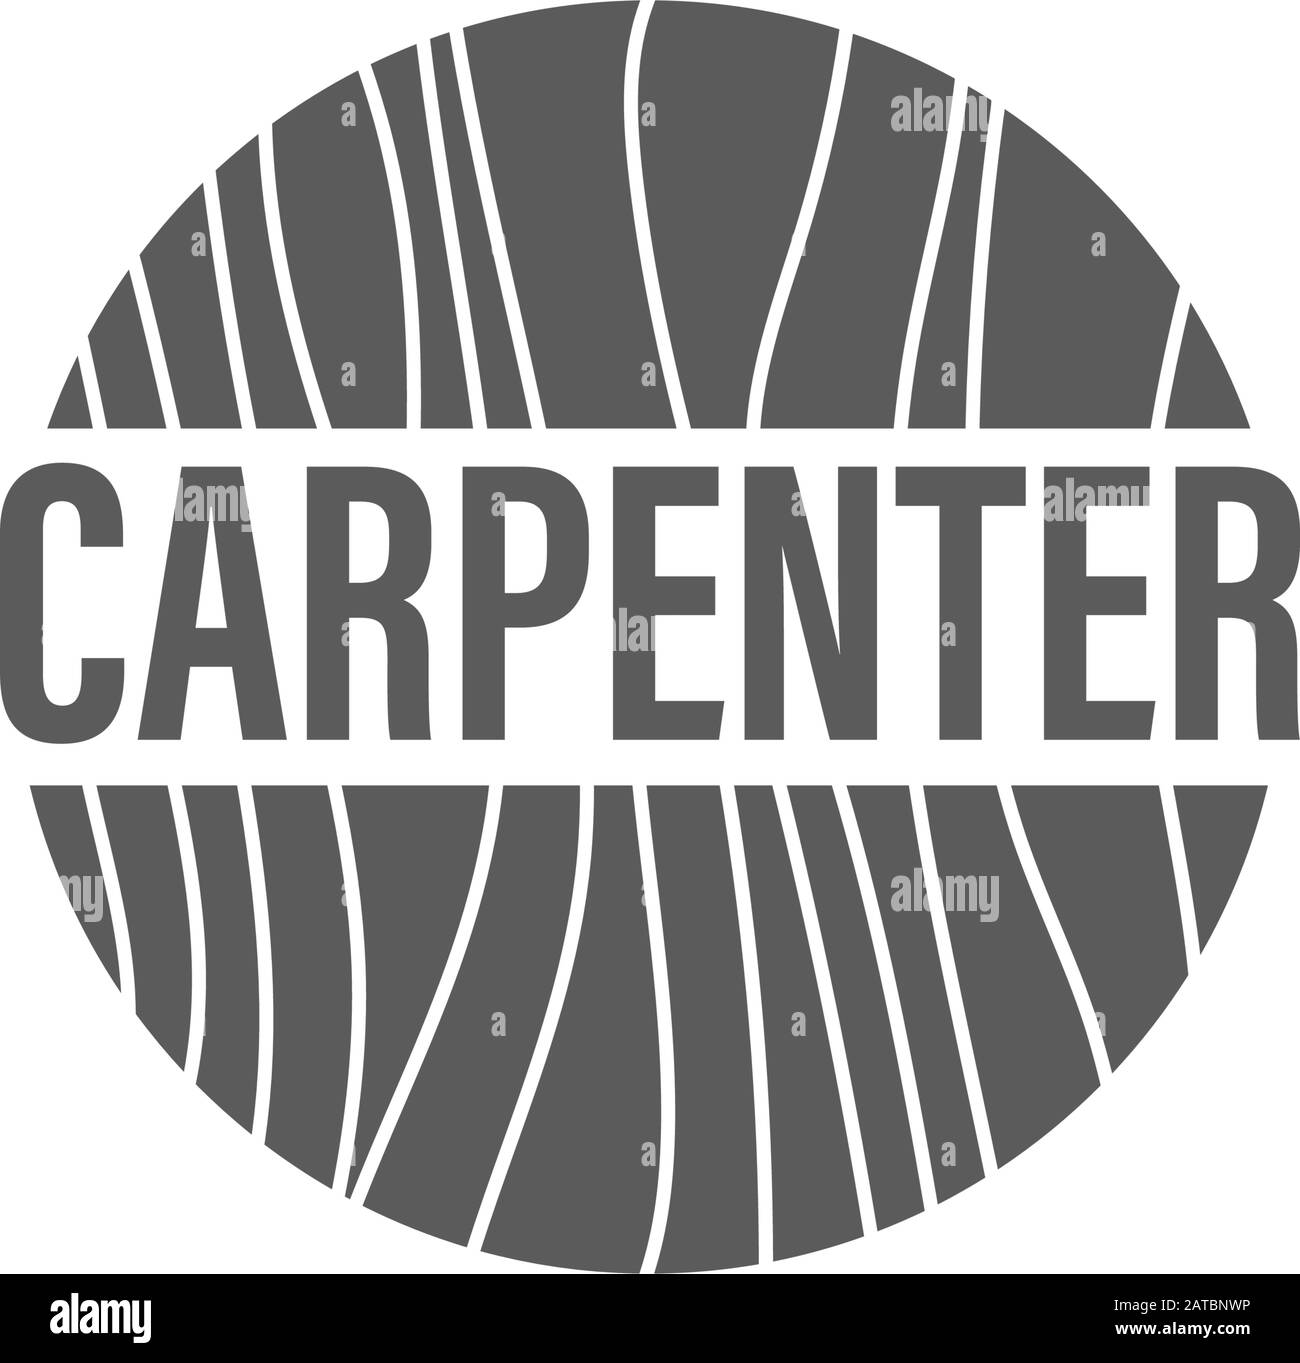 Logo design Concept about Carpenter - Fine Wood - Hand Made - Furnishing . Carpenter design element in vintage style for logo, label, badge, t-shirts. Stock Vector